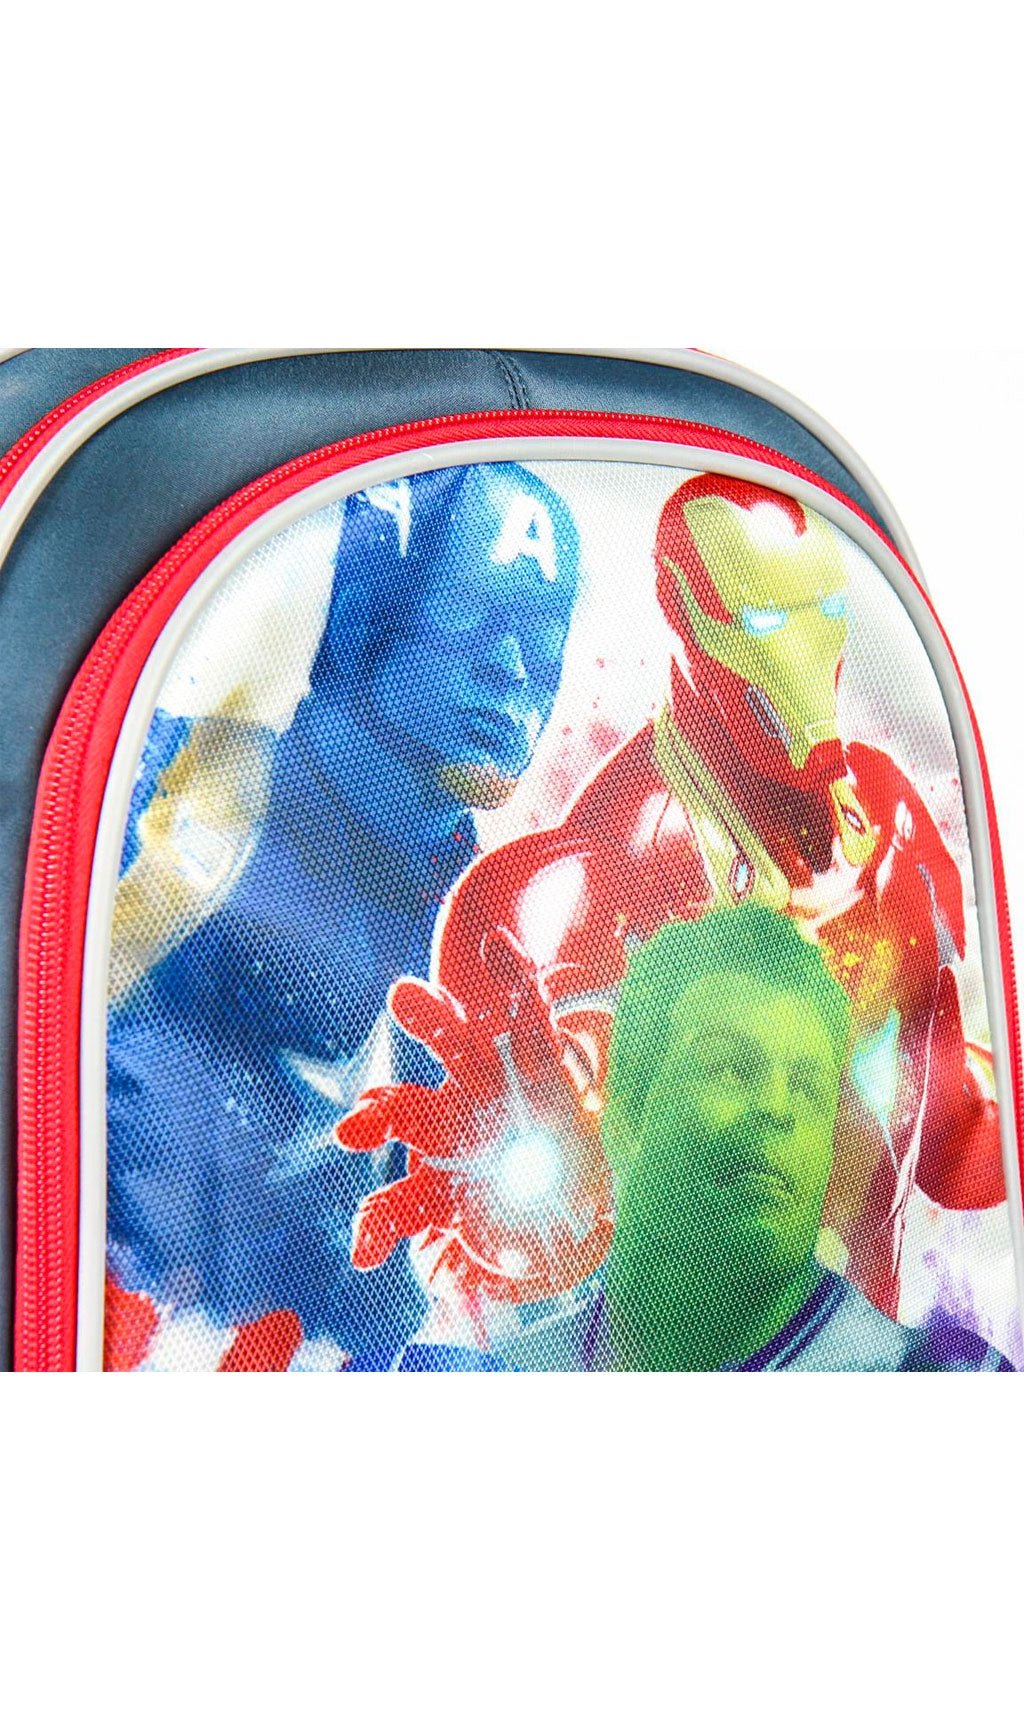 Zaino Avengers™ per bambini